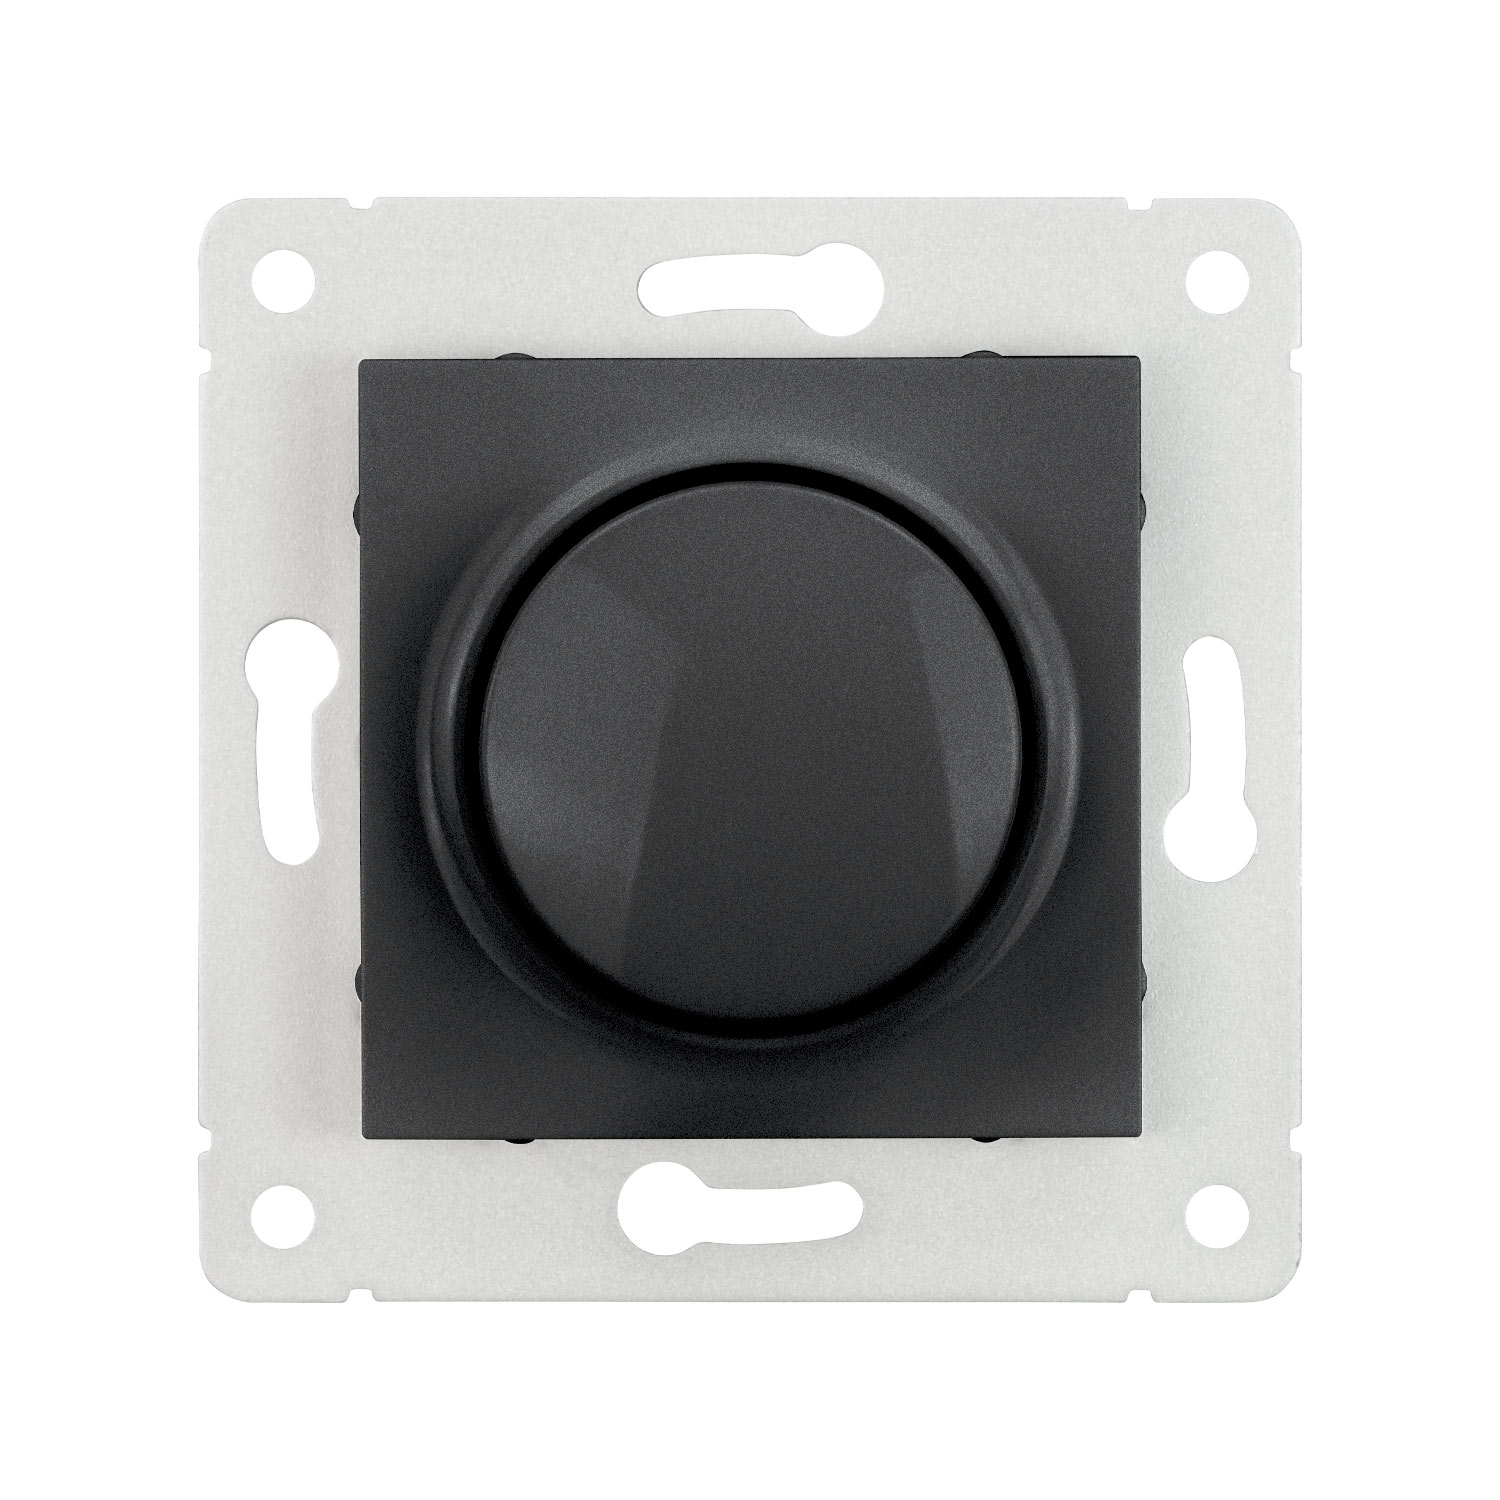 Enkel Interruptor regulador LED Triac 400W negro 74.5*74.5mm